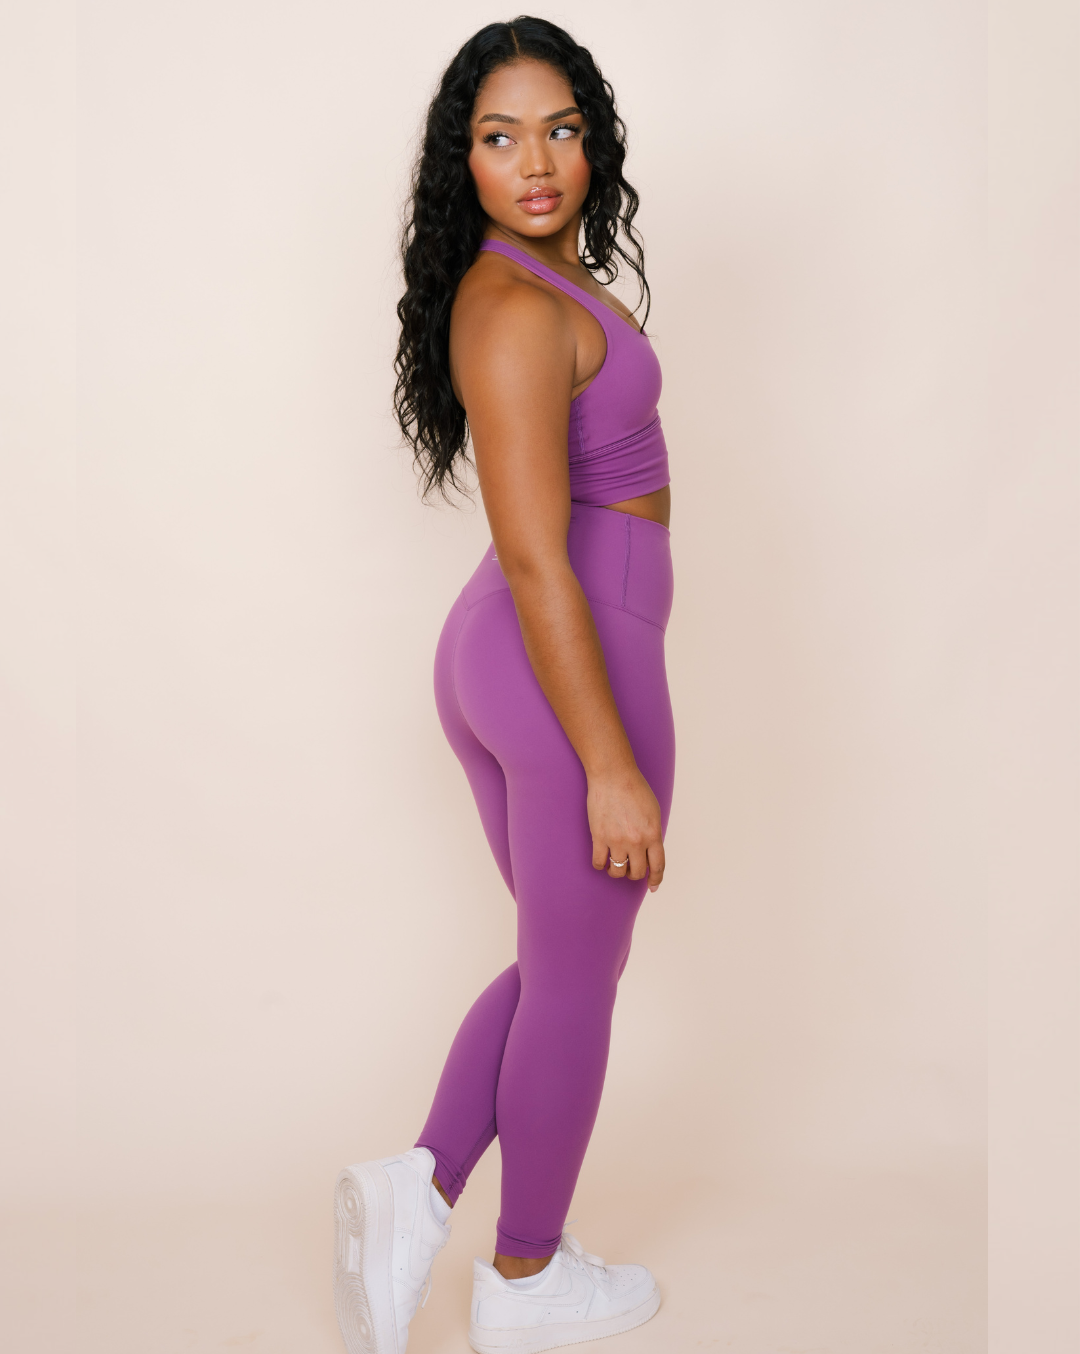 DailyWear Womens Solid Knee Length Short Yoga Cotton Leggings H.Gry, XLarge  Heather Grey